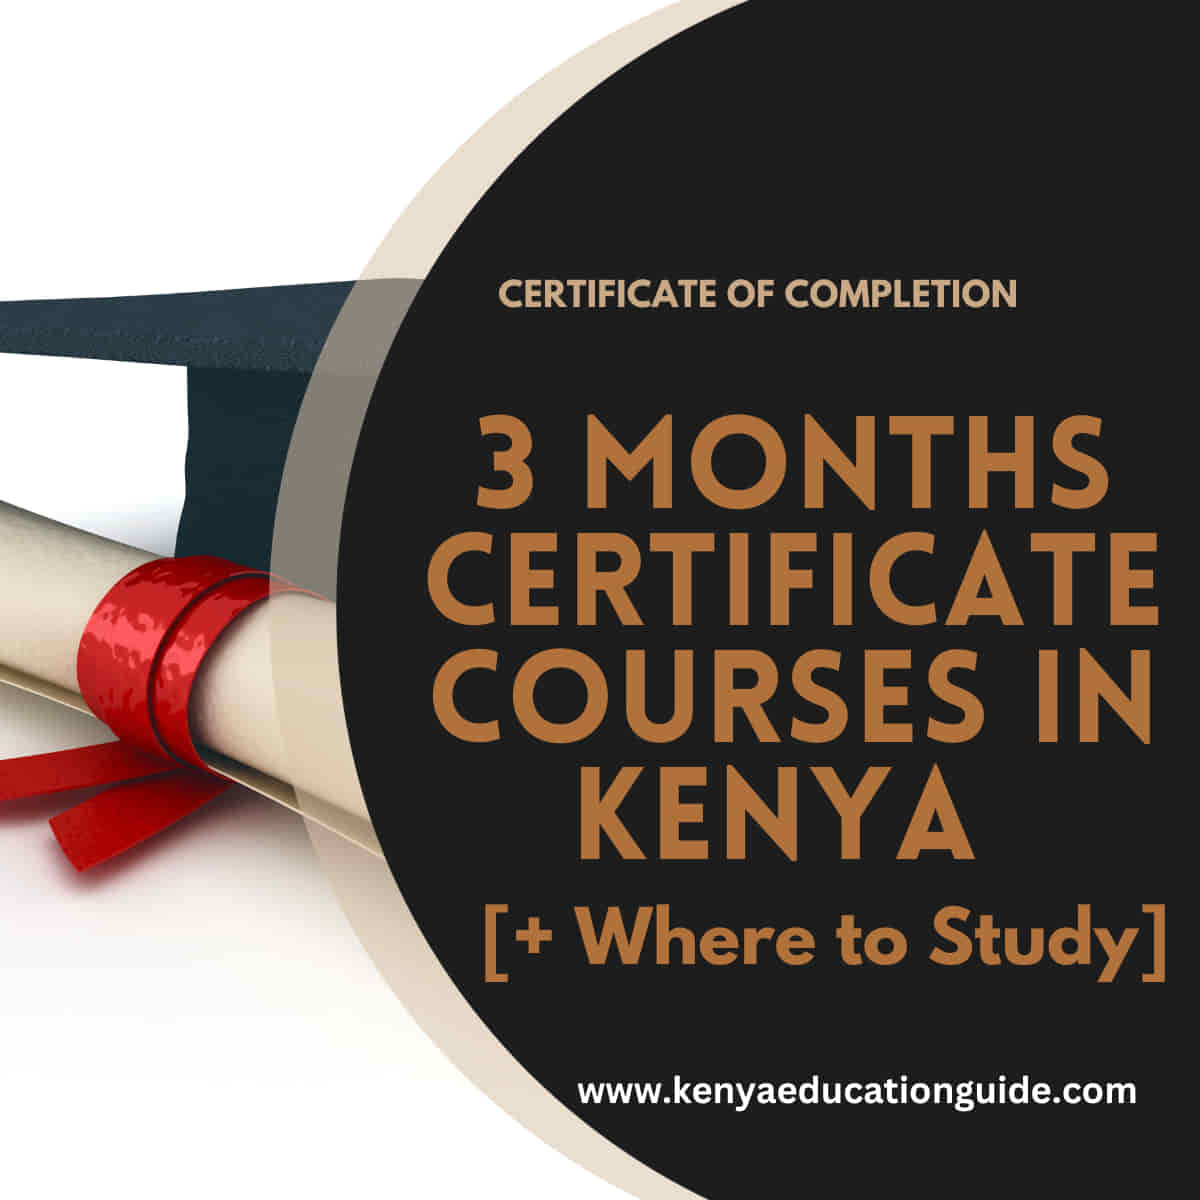 3 months certificate courses in Kenya